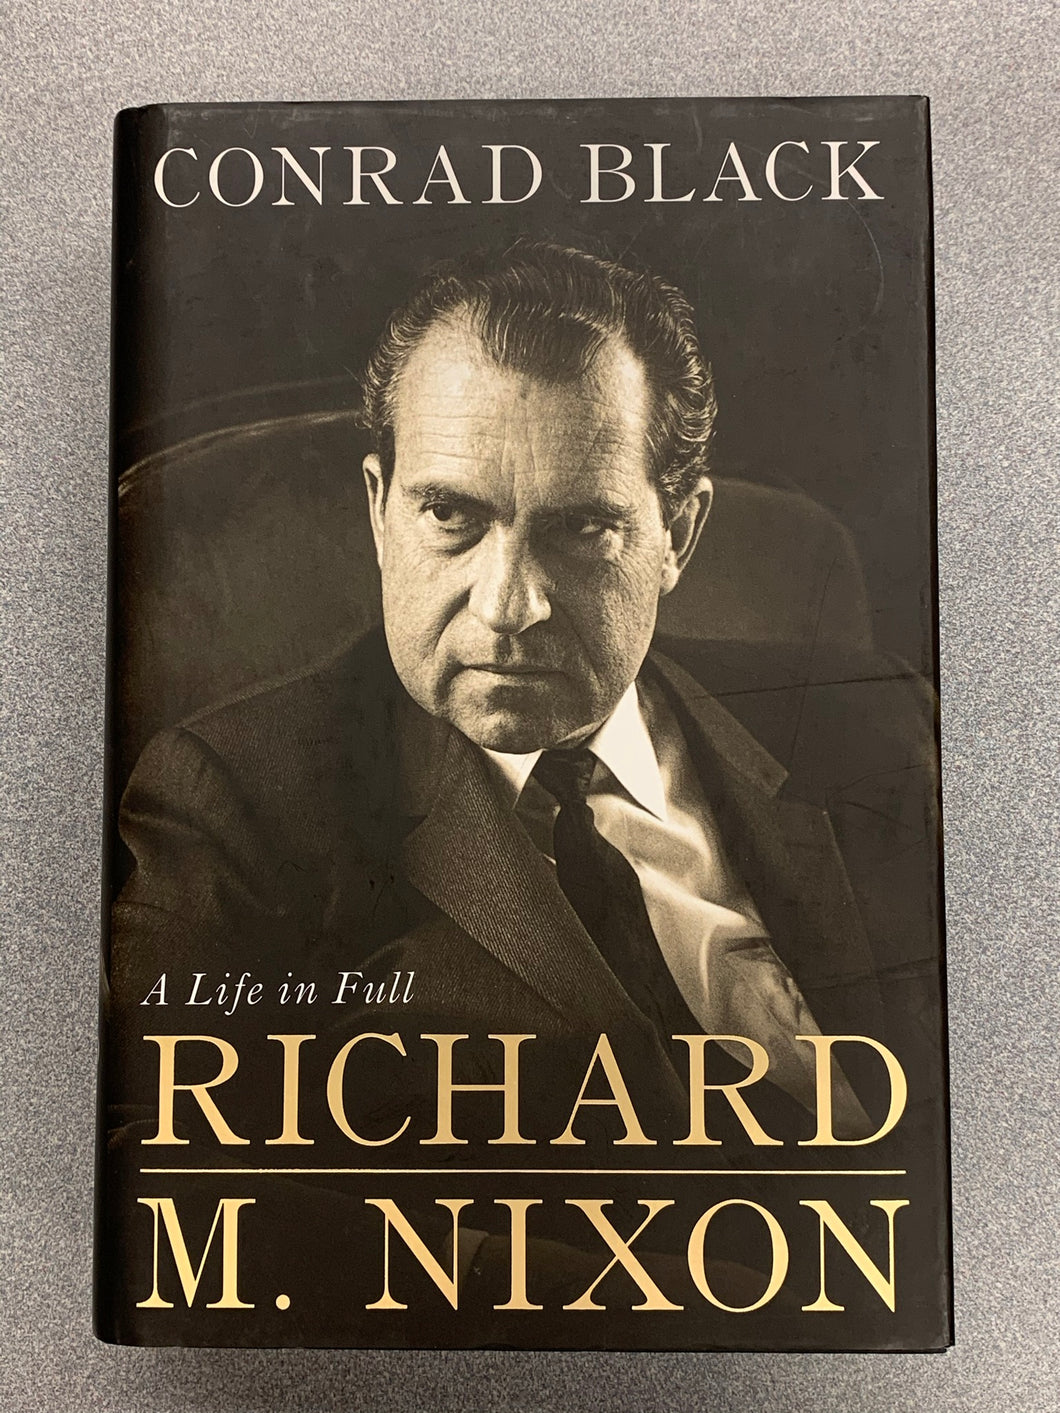 Richard M. Nixon: A Life in Full, Conrad Black [2007] BI 4/21